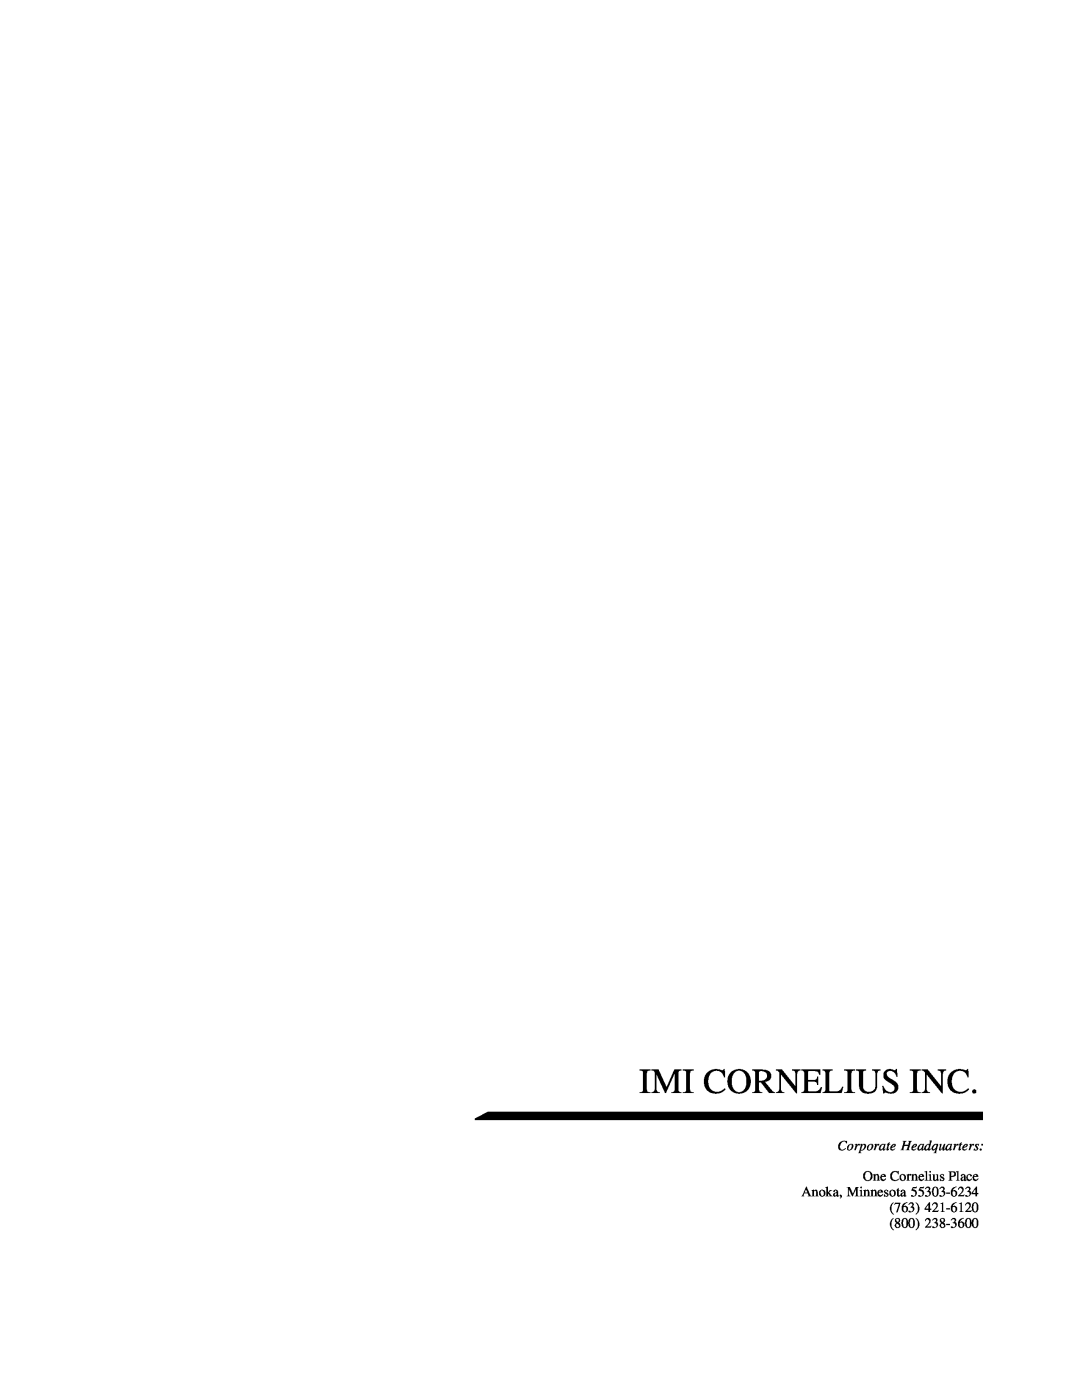 Cornelius 175 8 Valve manual Imi Cornelius Inc, Corporate Headquarters, One Cornelius Place Anoka, Minnesota 